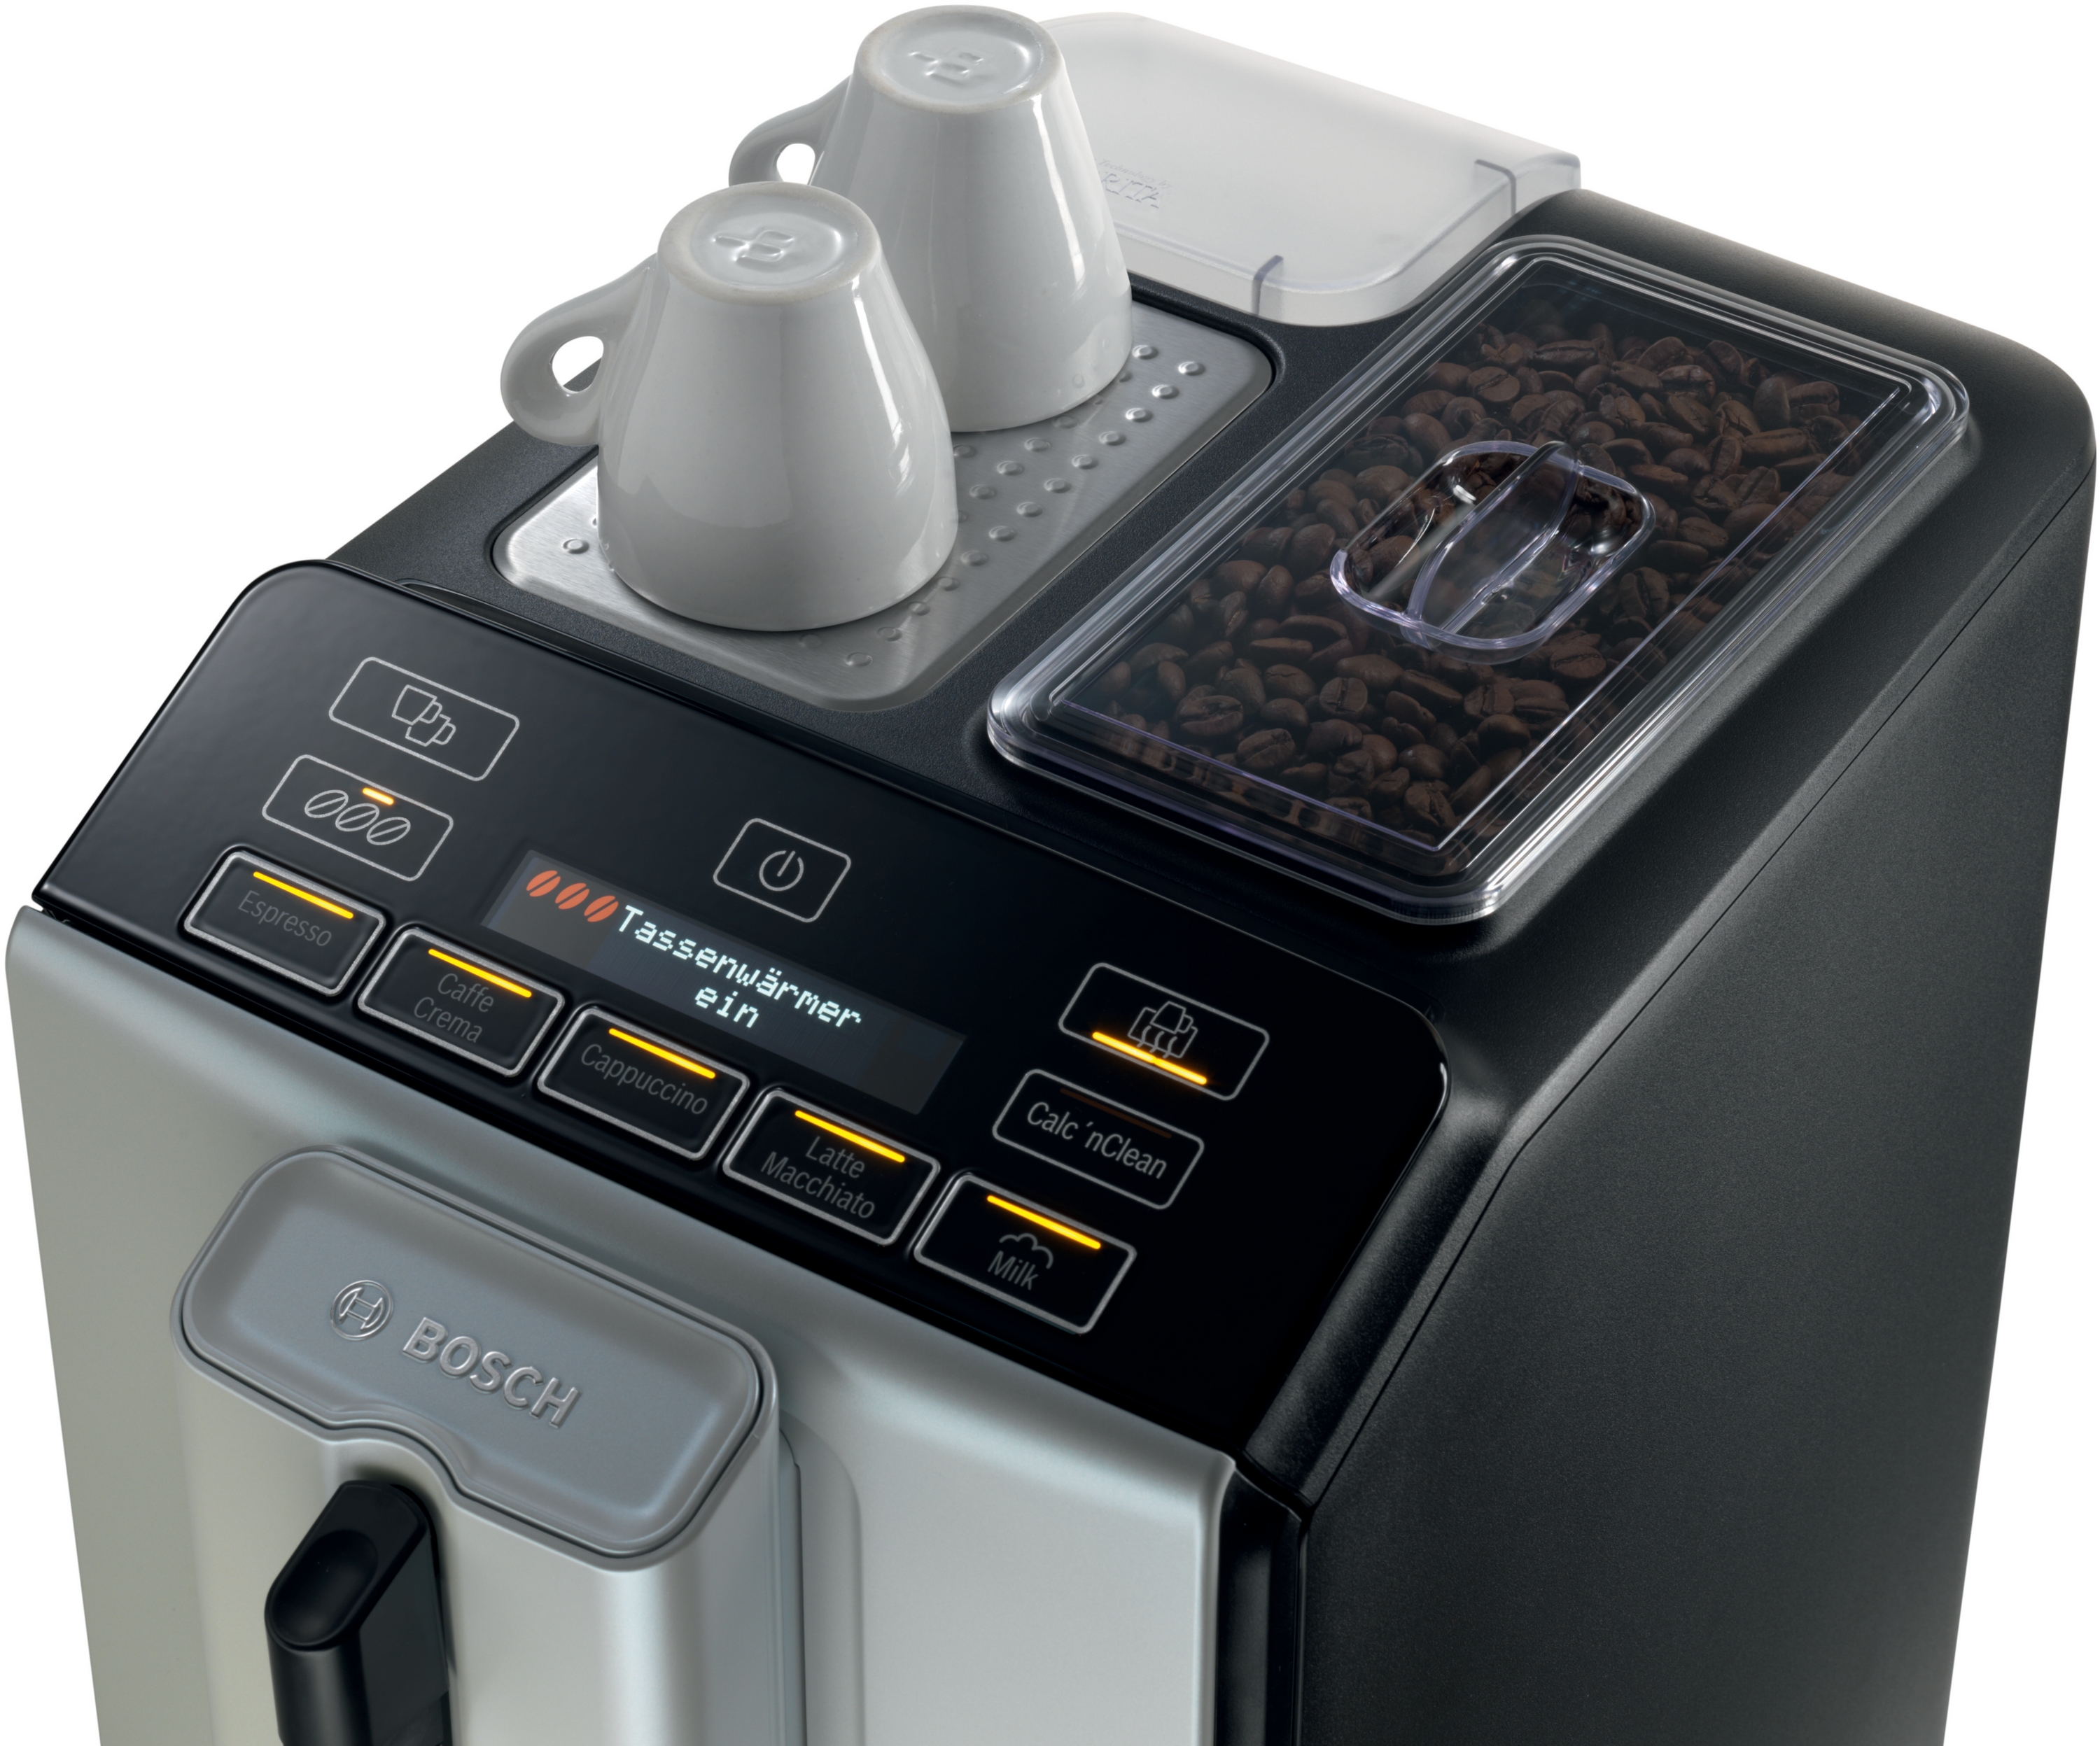 Aparat za kafu TIS30321RW Potpuno automatizovan, Verocup 300, 1300 W